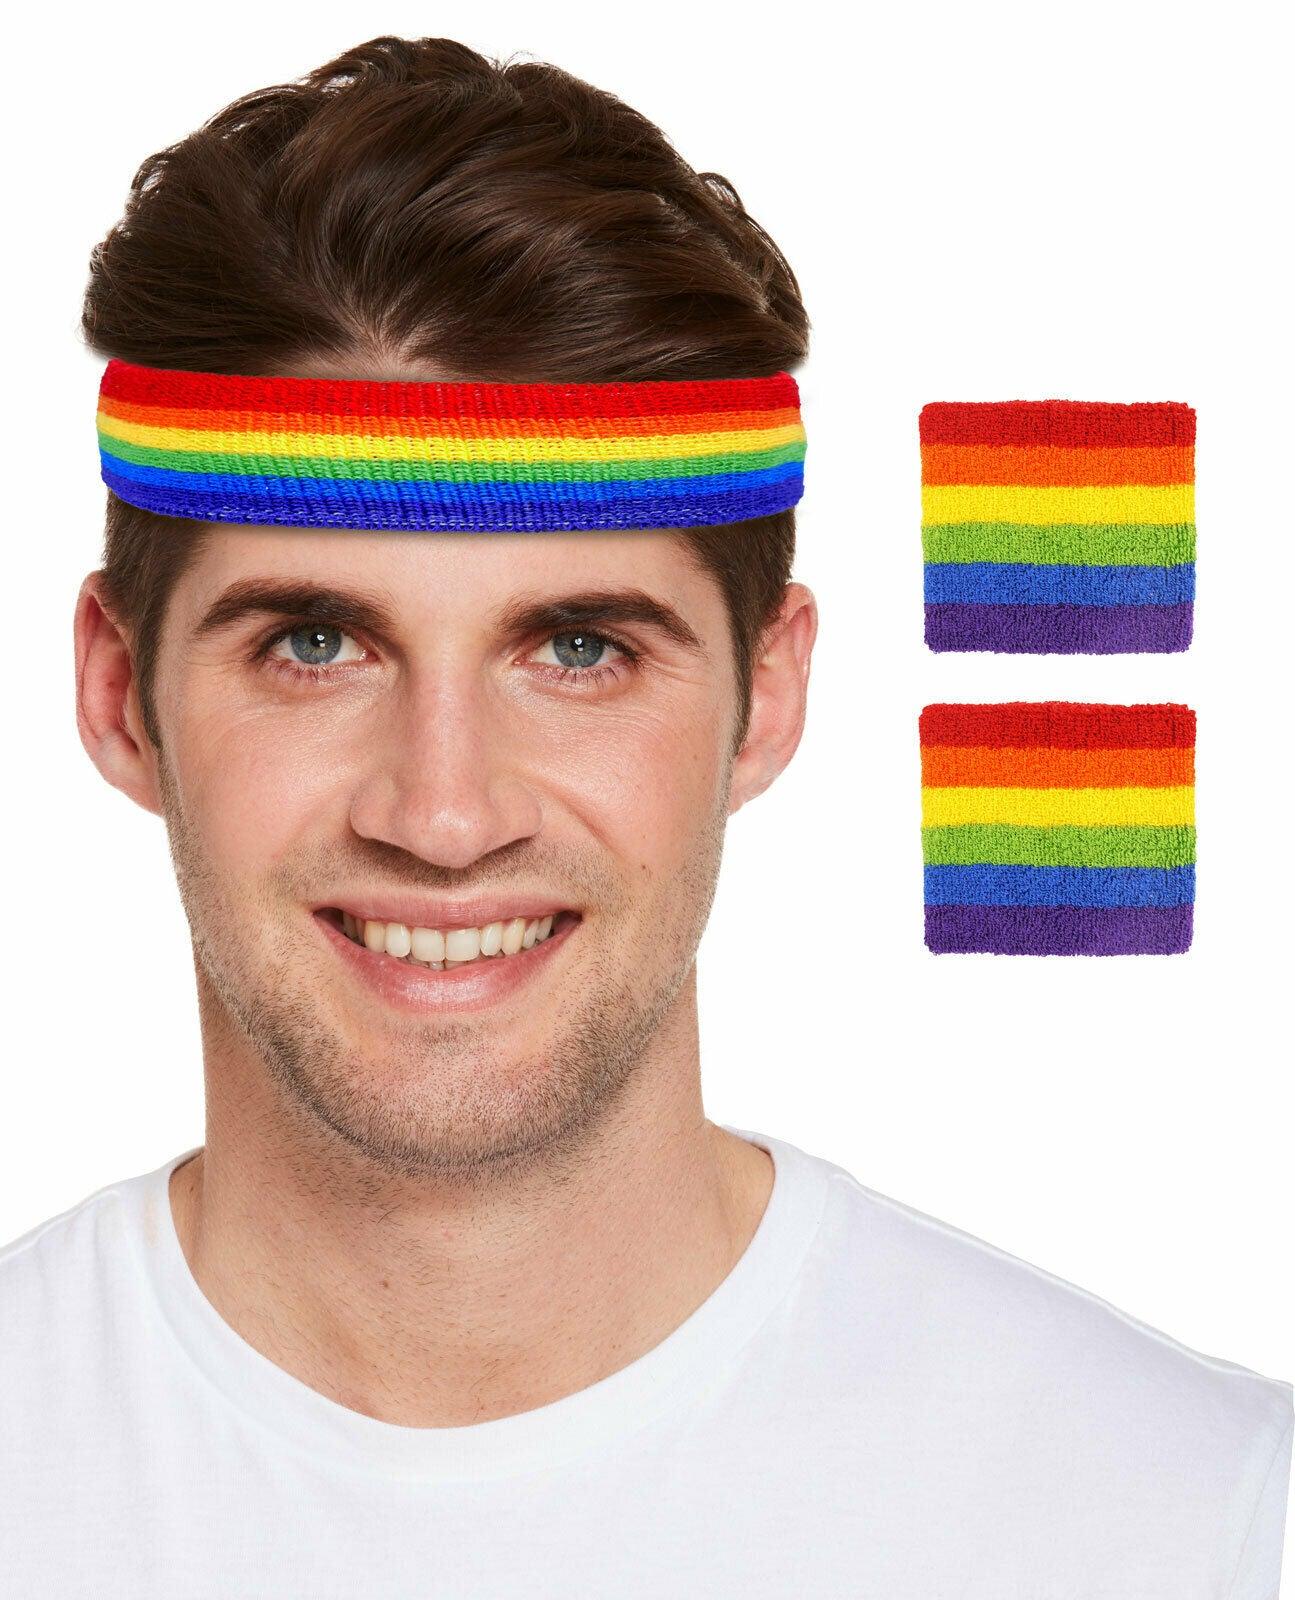 Rainbow Sports Headband Wristbands Set Exercise Fun LGBTQ Gay Pride Events Accessories - Labreeze